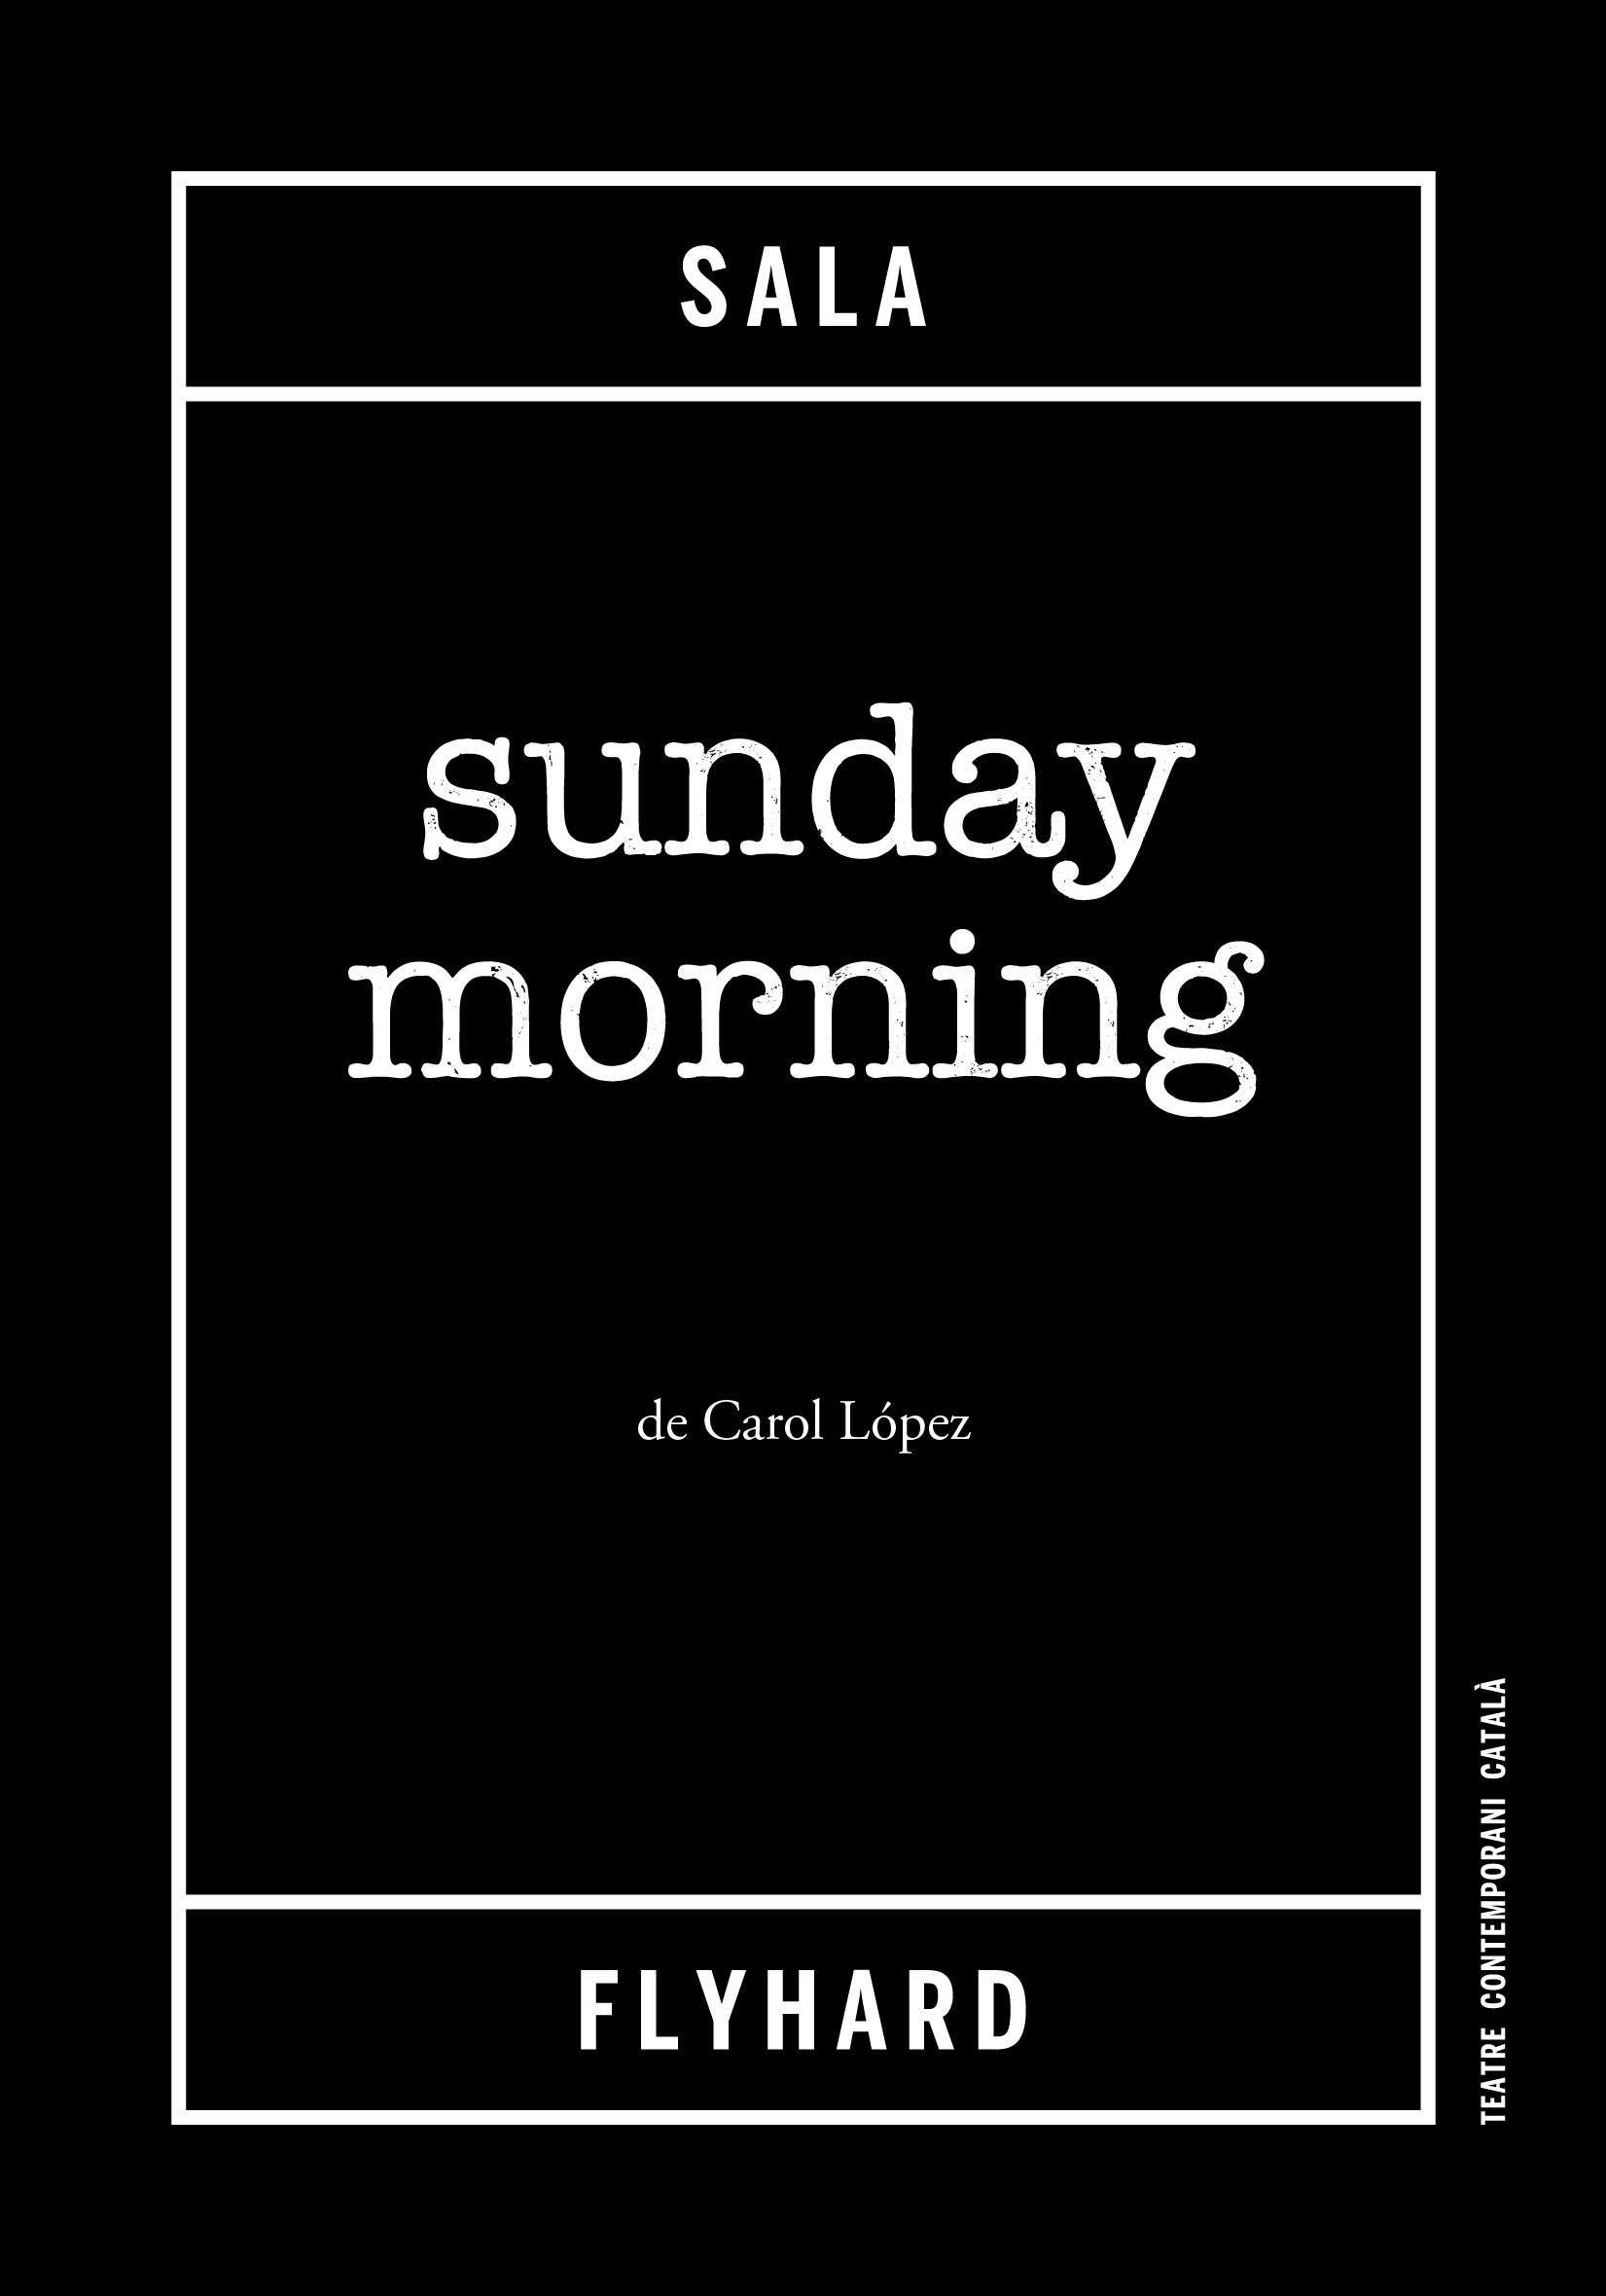 Sunday morning